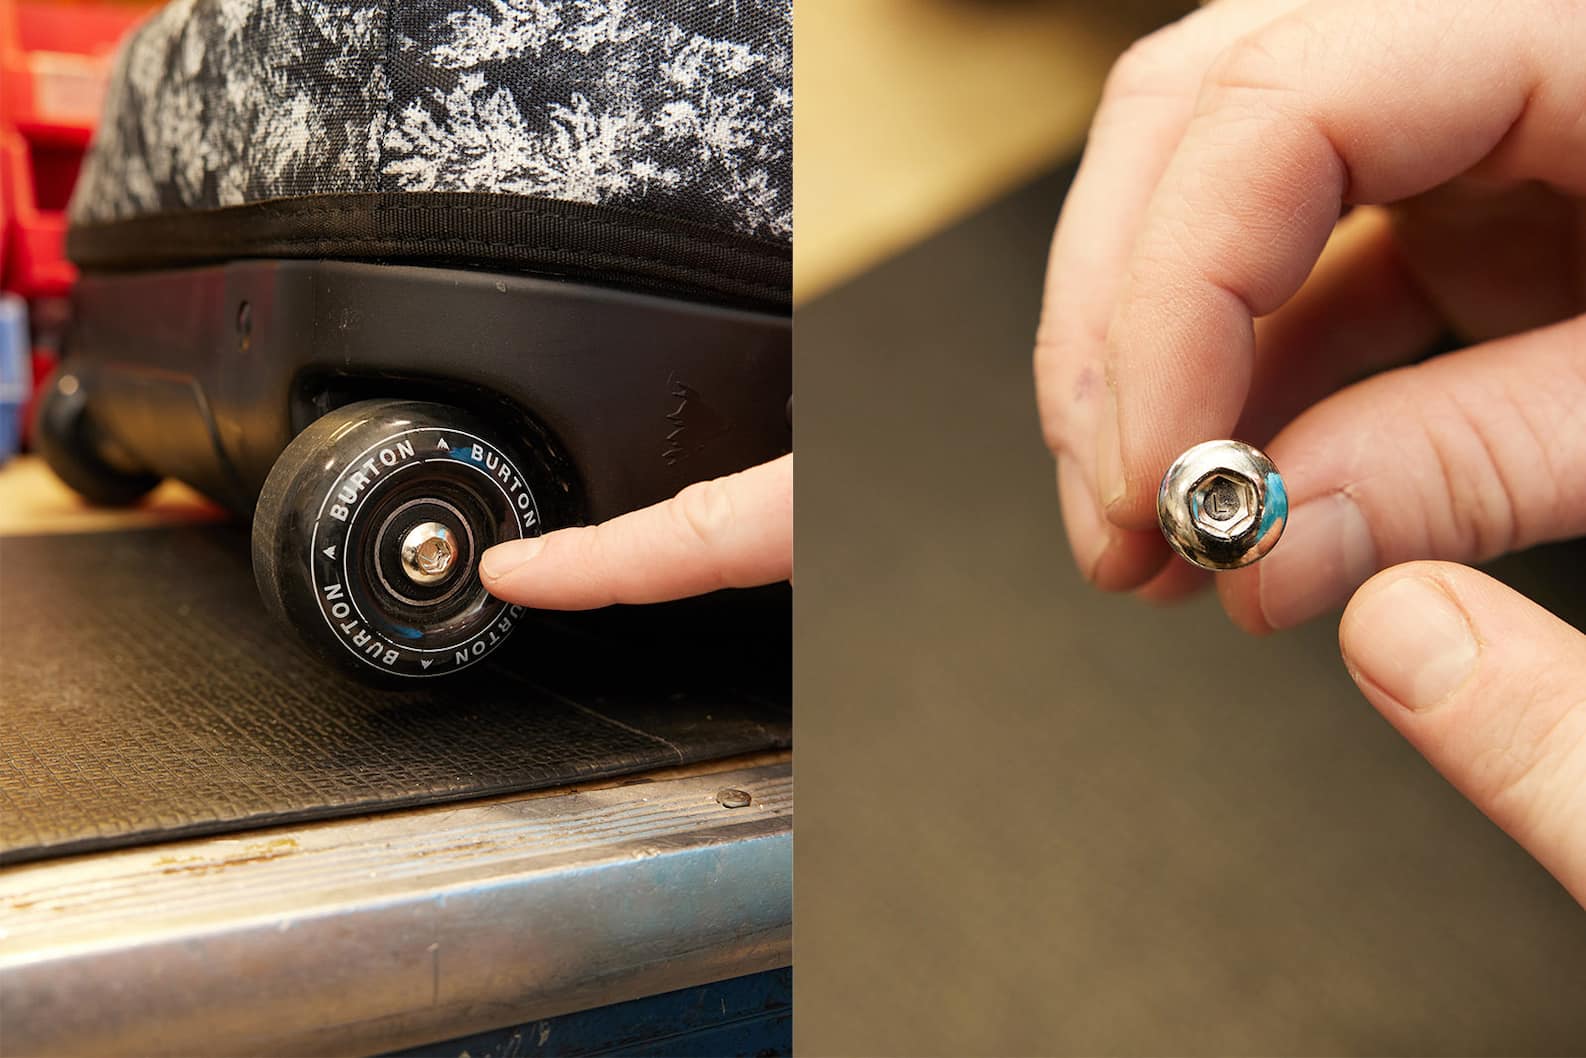 Burton luggage wheel replacement instructions: Identify left axle